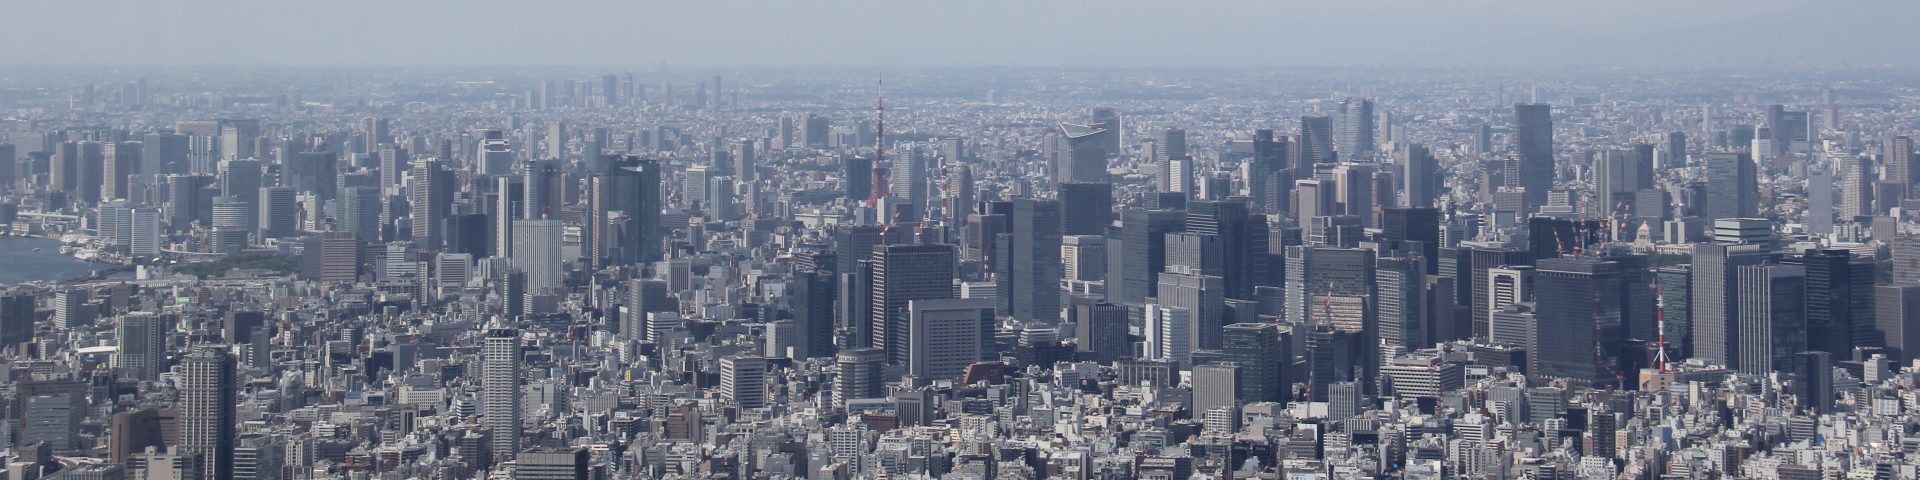 Tokyo Skyline from Skytree